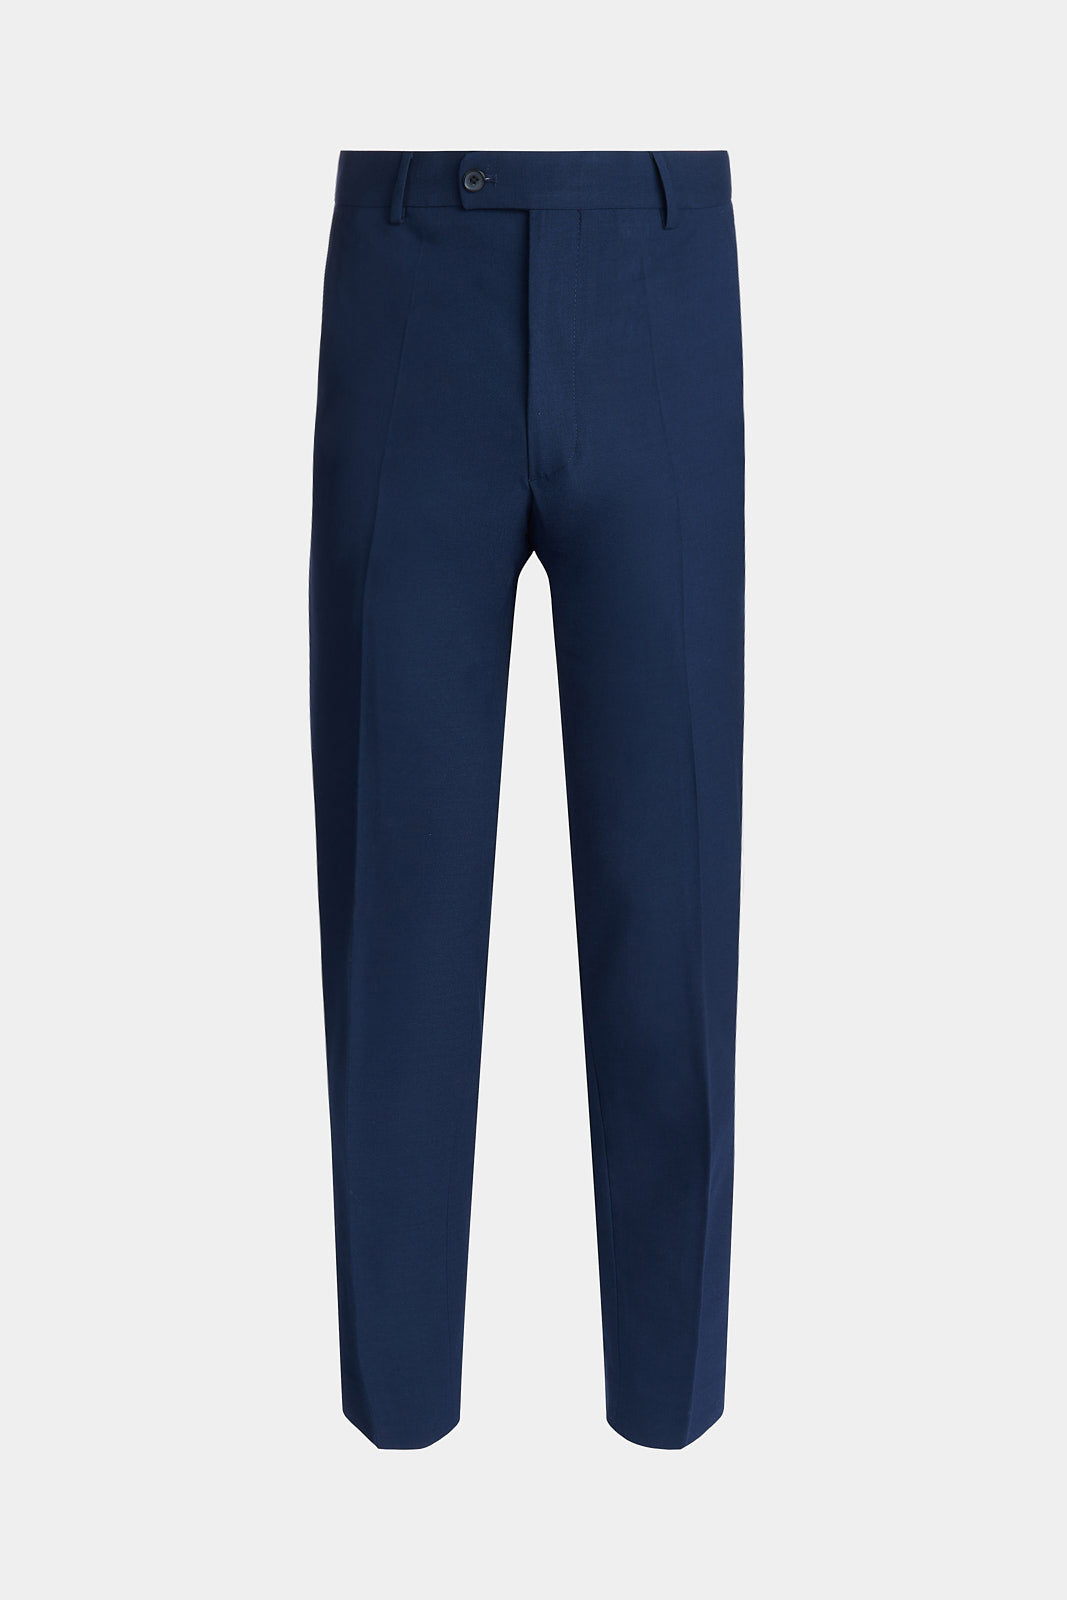 rizanyas Casual Rayon Palazzo Plain Pants/Trousers for Women (Free Size)  Dark Blue : Amazon.in: Fashion